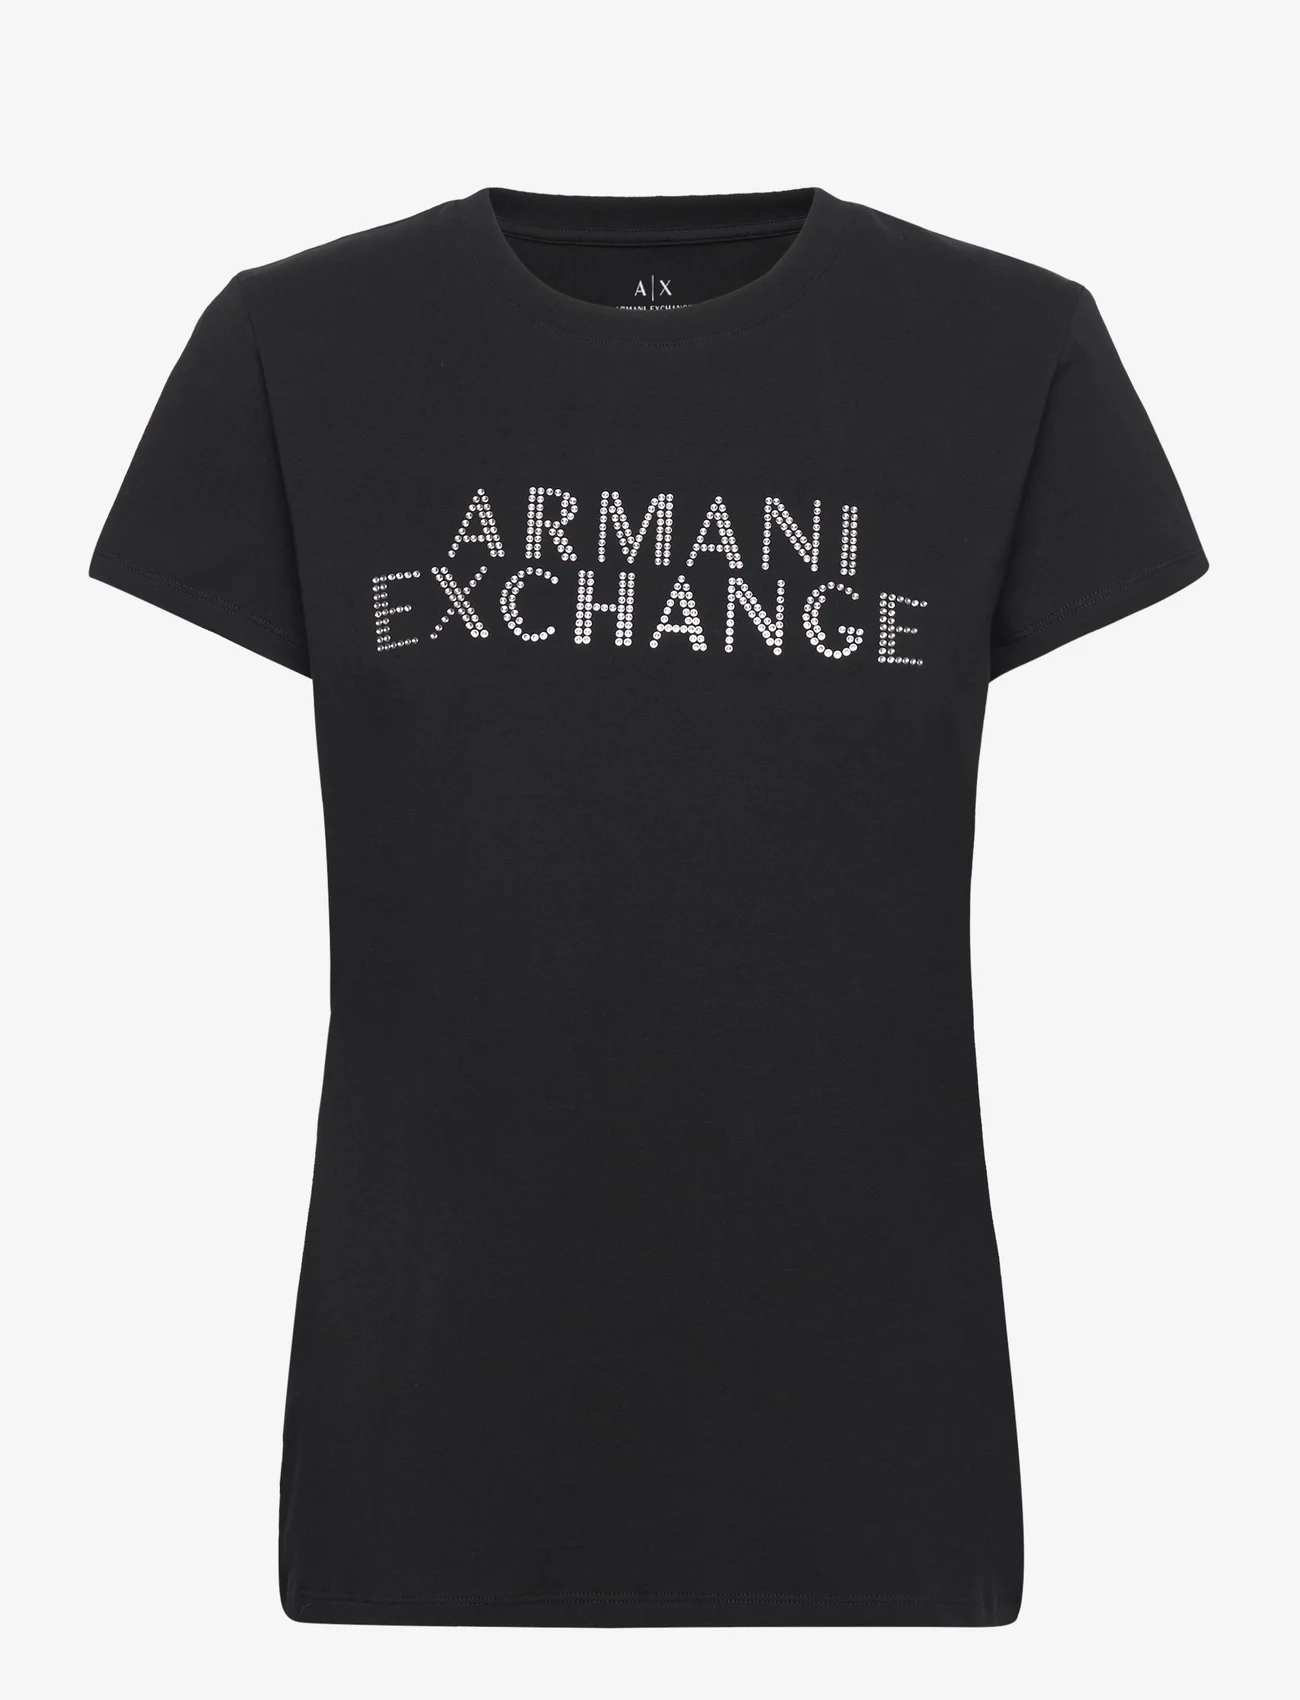 Armani Exchange - T-SHIRT - t-skjorter - 1200-black - 0